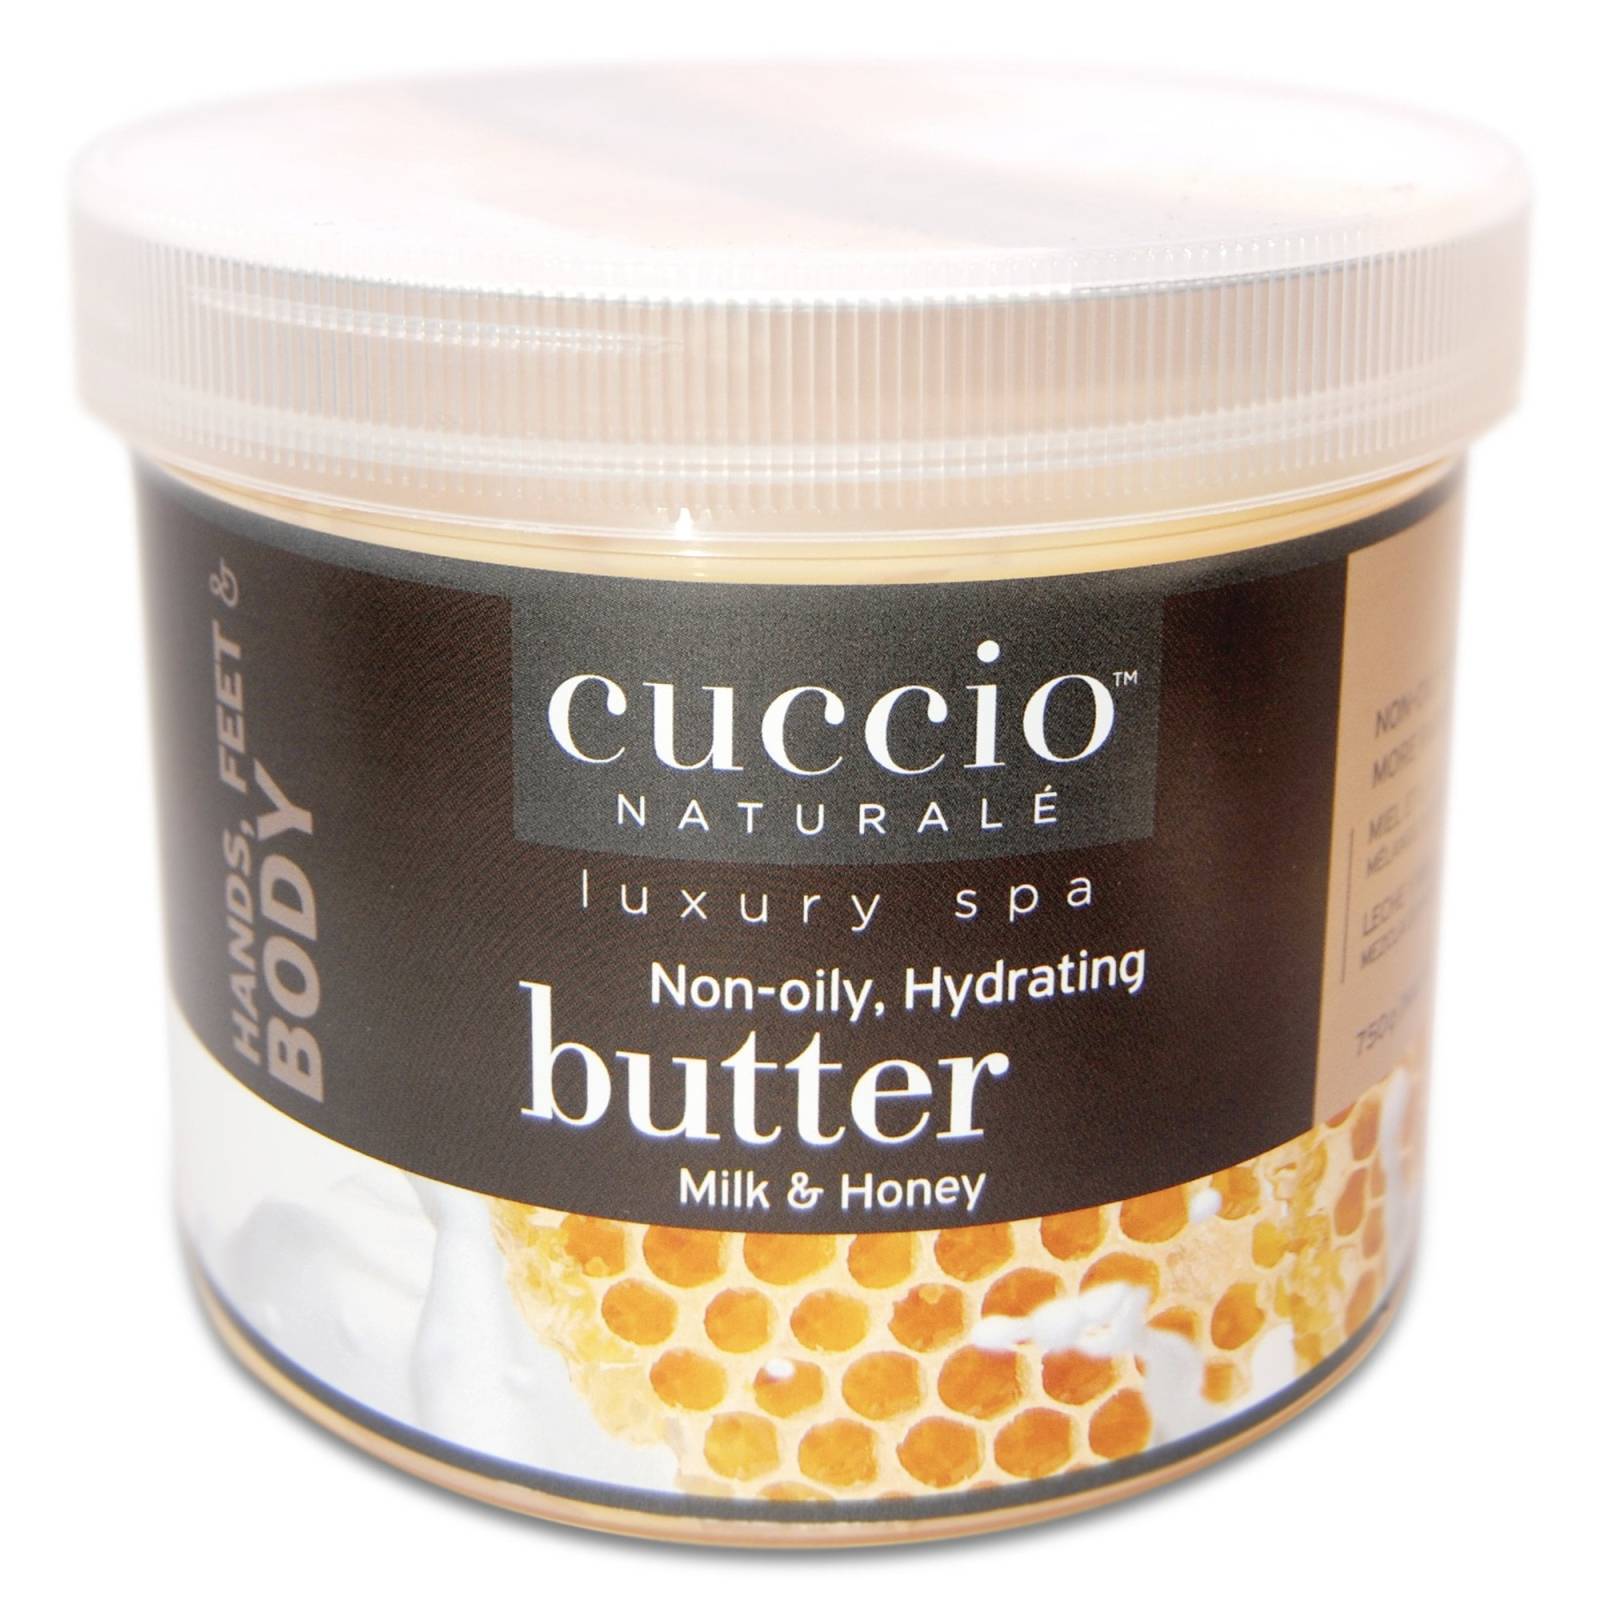 Cuccio Non-Oily Hydrating Butter Hands; Feet & Body Milk & Honey 750g